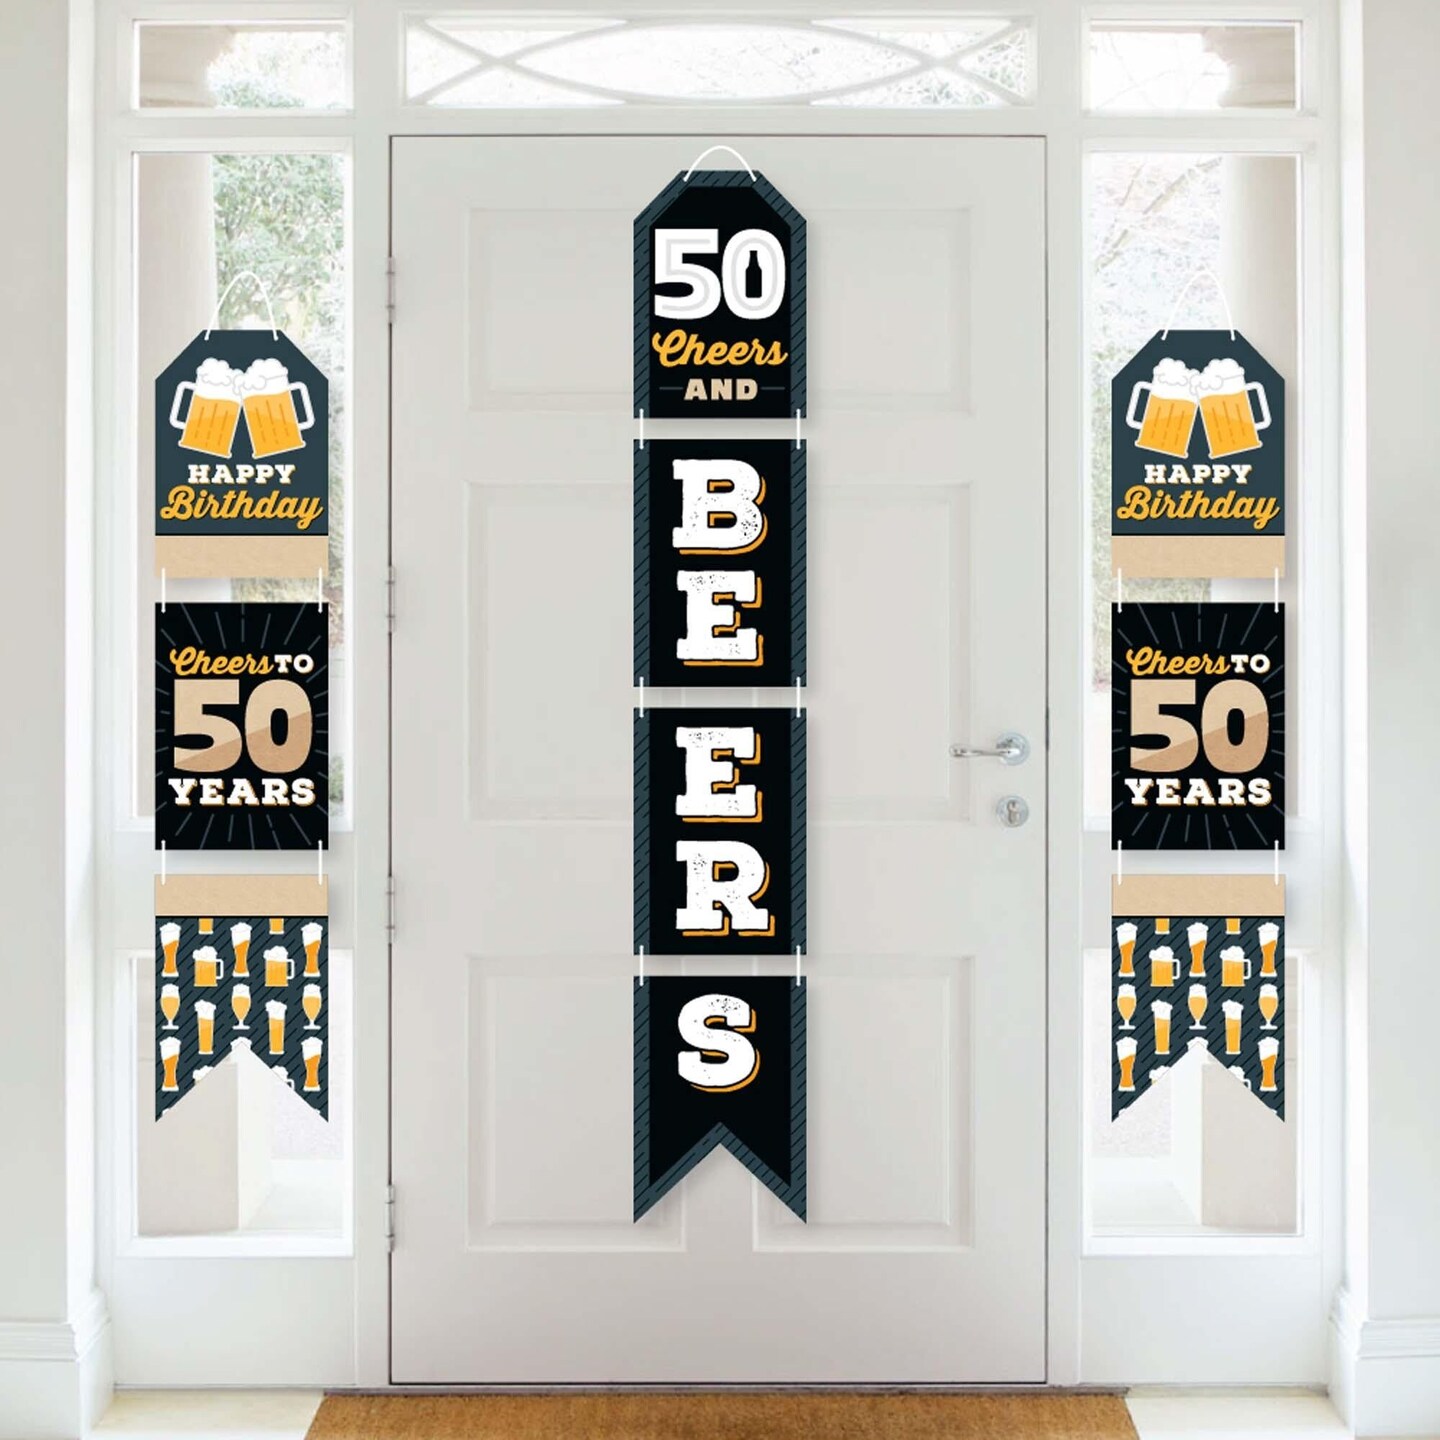 Big Dot of Happiness Cheers and Beers to 50 Years - Hanging Vertical Paper Door Banners - 50th Birthday Party Wall Decoration Kit - Indoor Door Decor